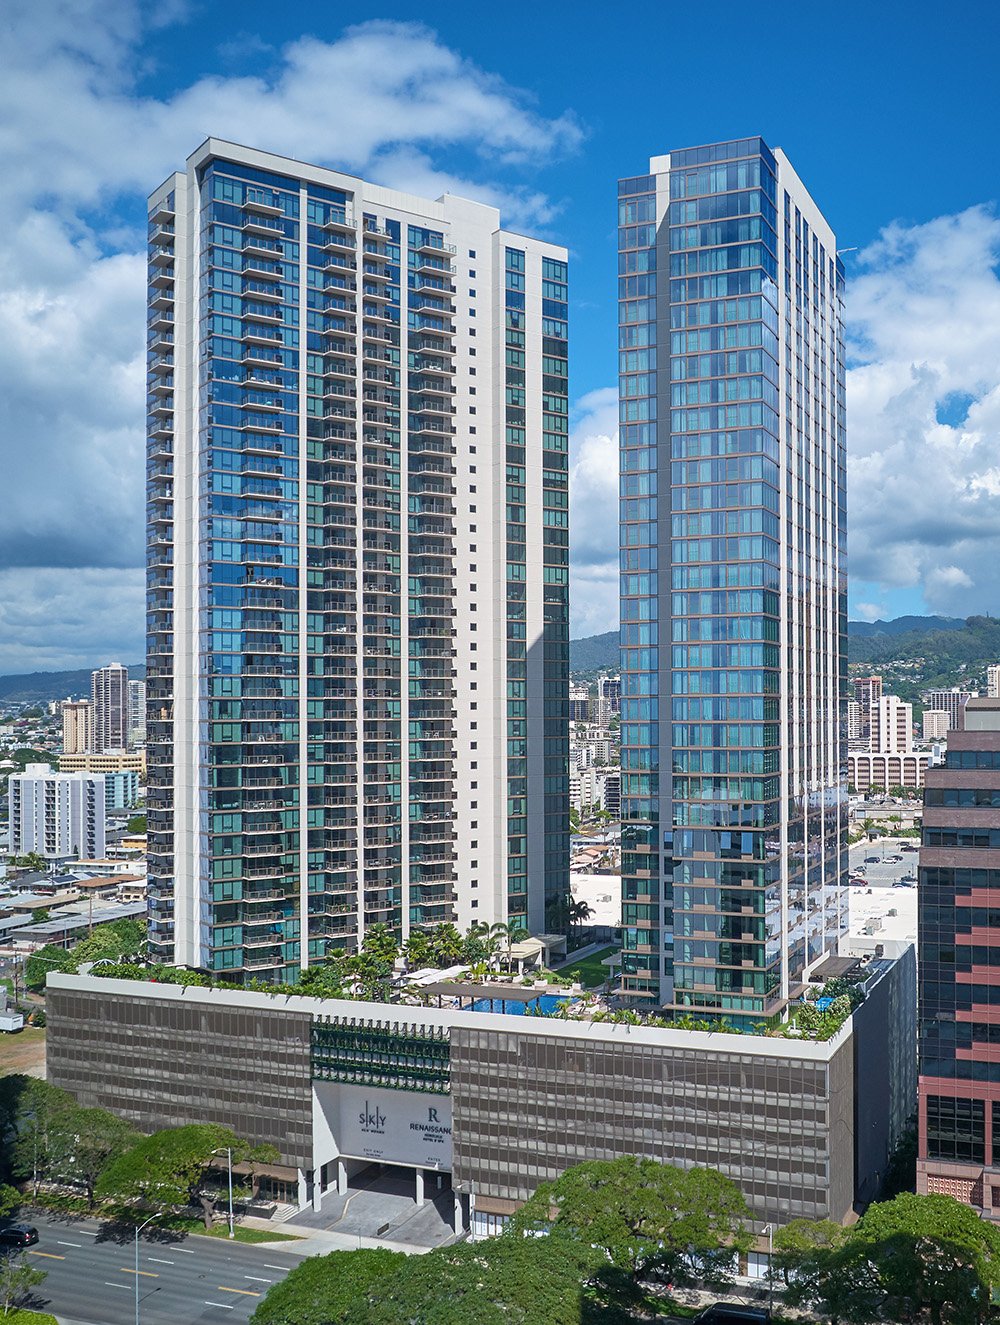 The Renaissance Honolulu Hotel  Spa has opened on Oahu